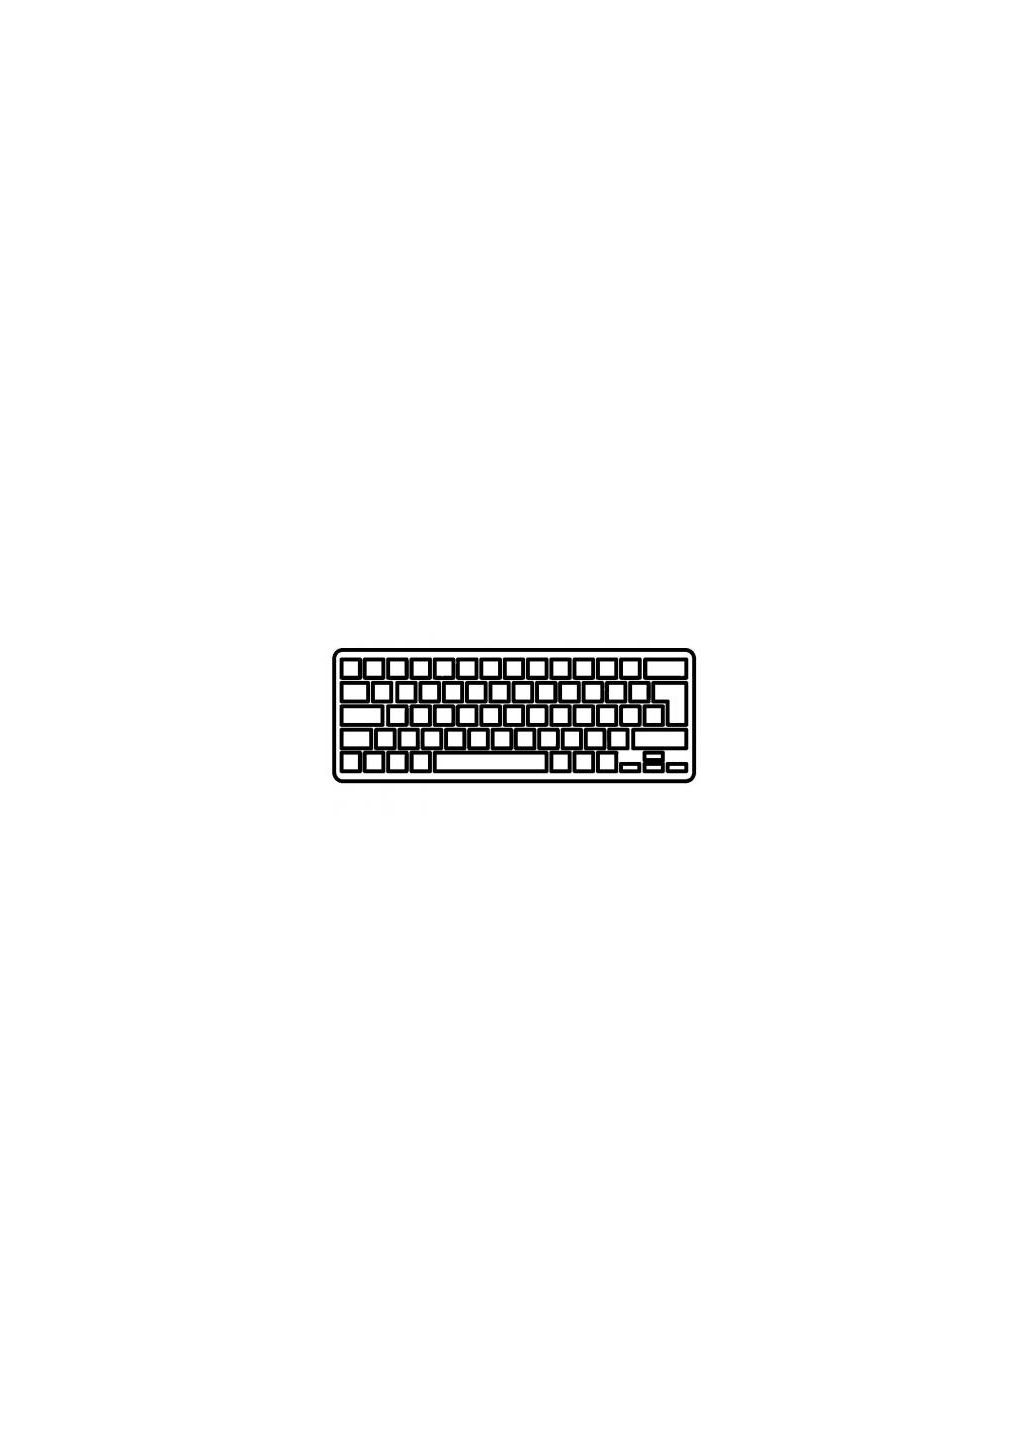 Клавиатура ноутбука Pro 15.4 A1286 (20092012) black,wo/frame,backlight RU/US (A46009) Apple pro 15.4 a1286 (2009-2012) black, wo/frame, backligh (276706512)